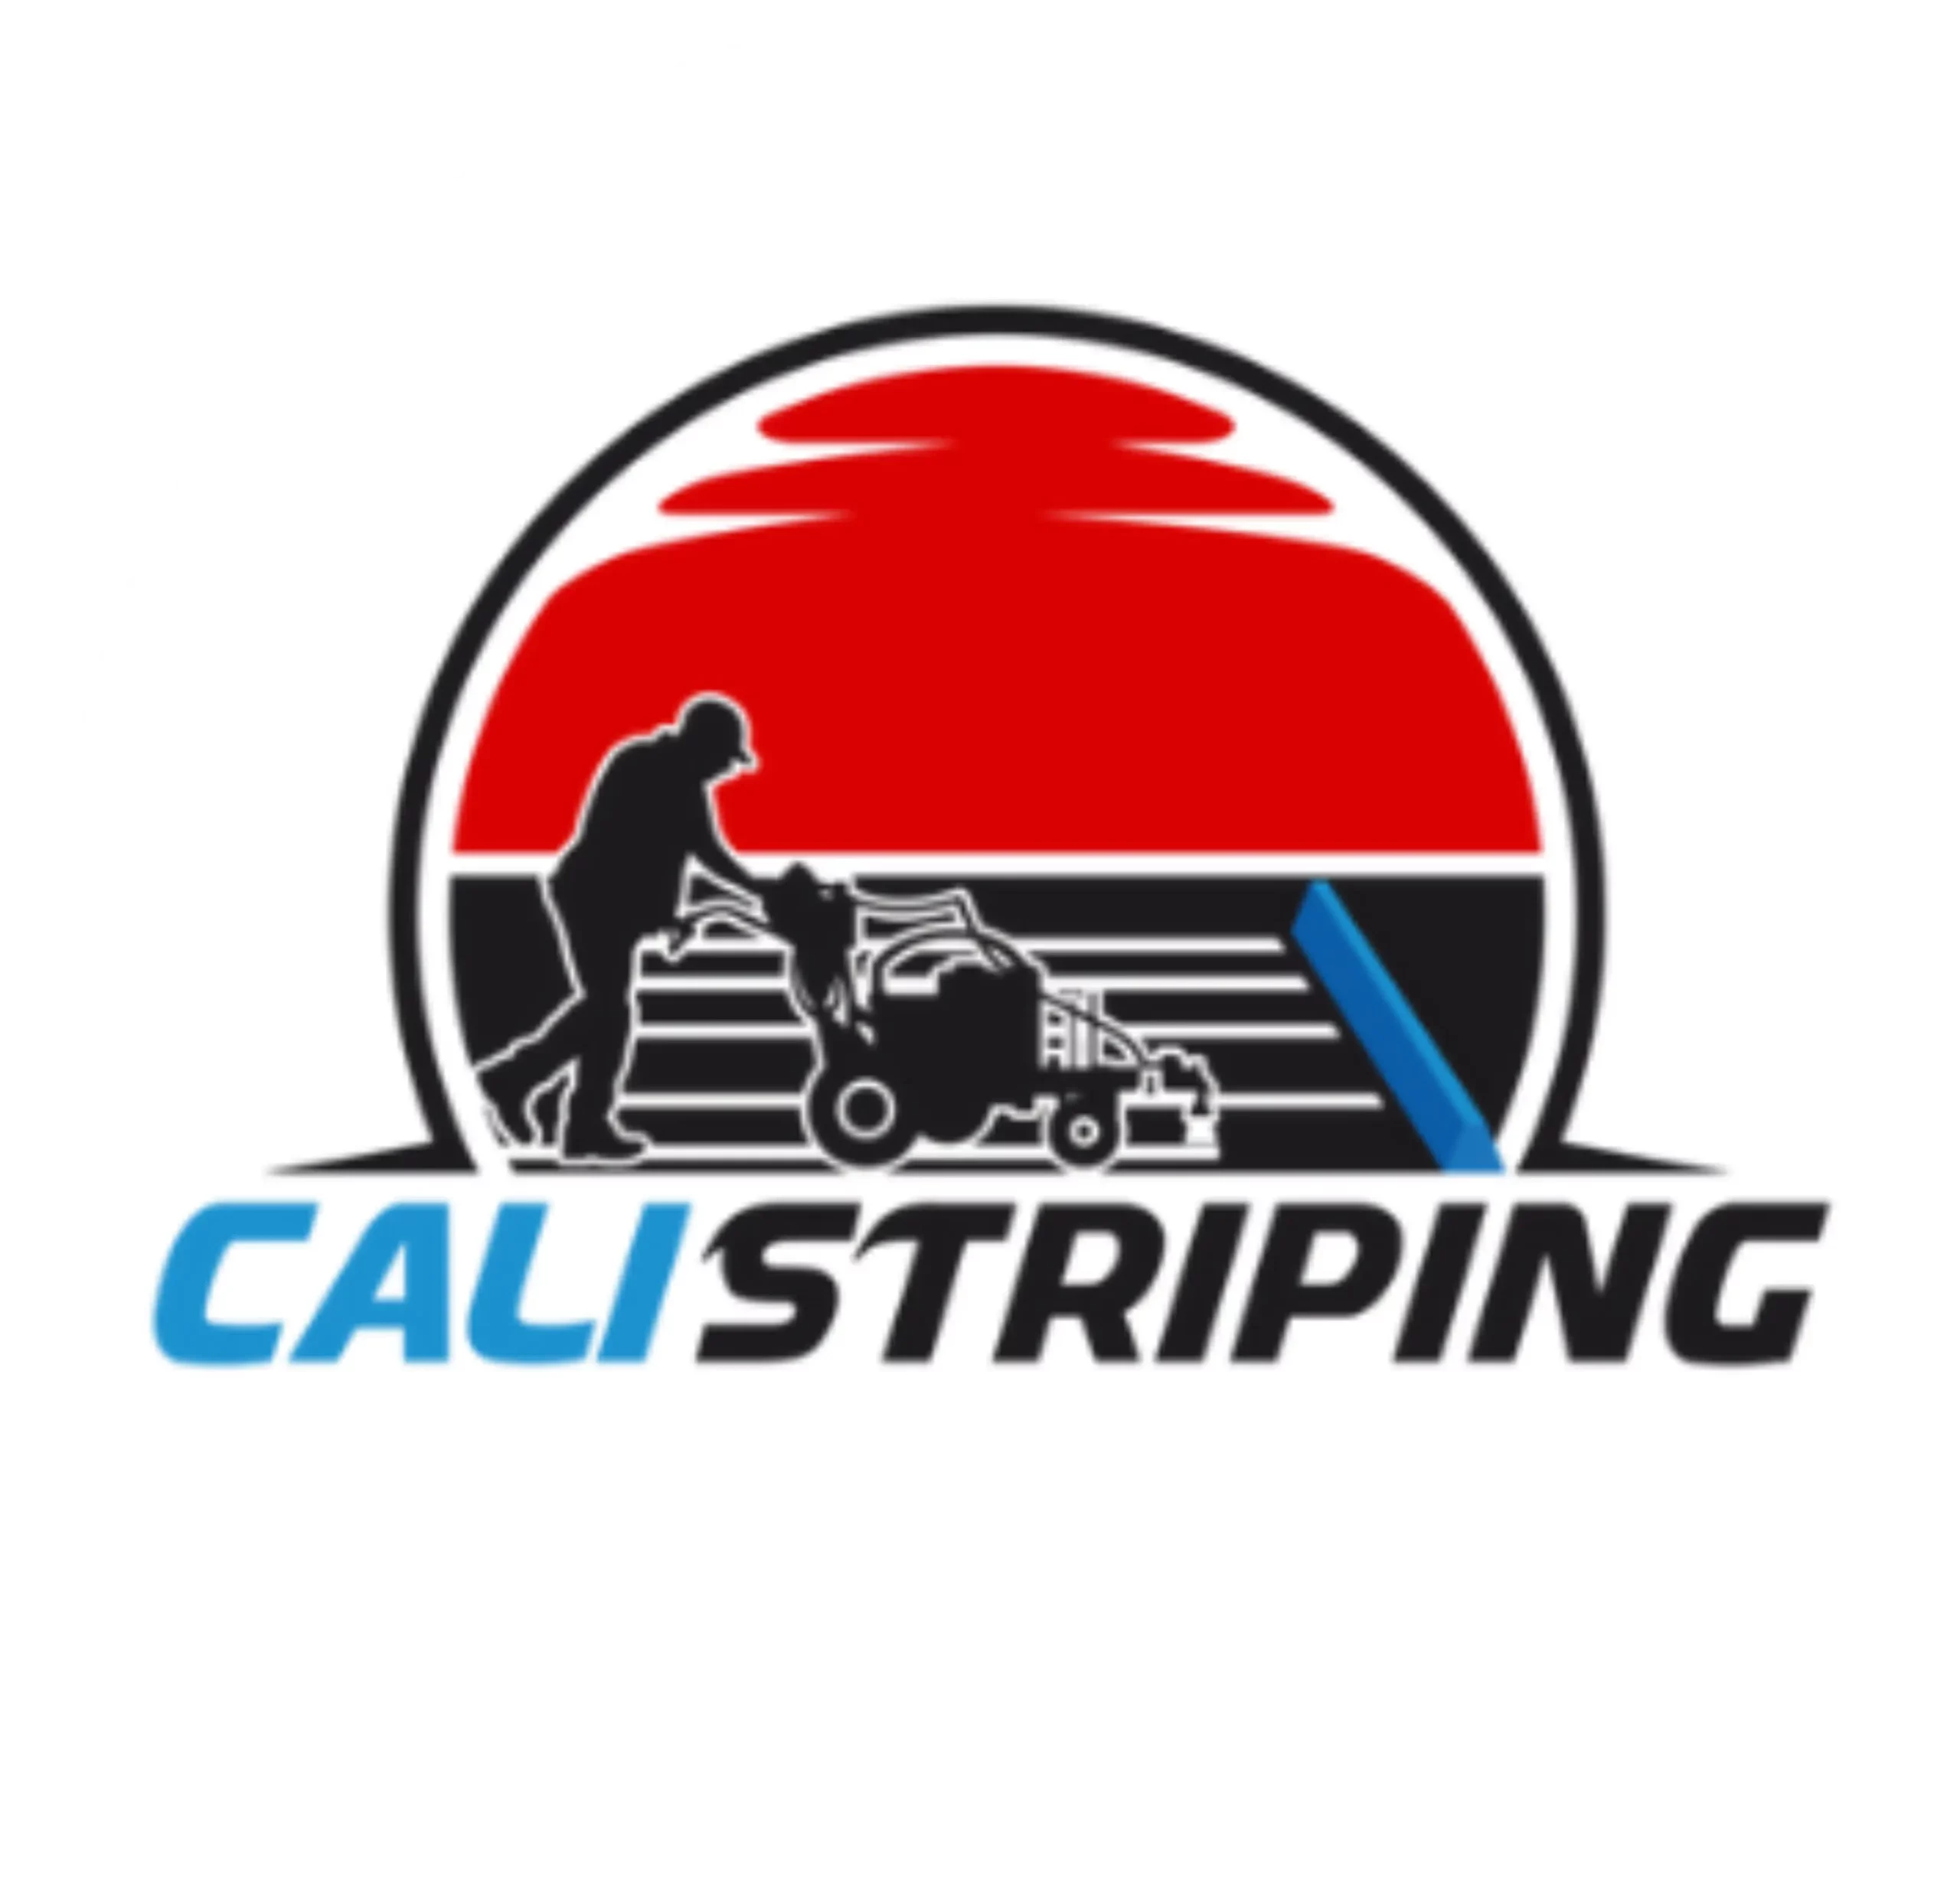 Cali Striping